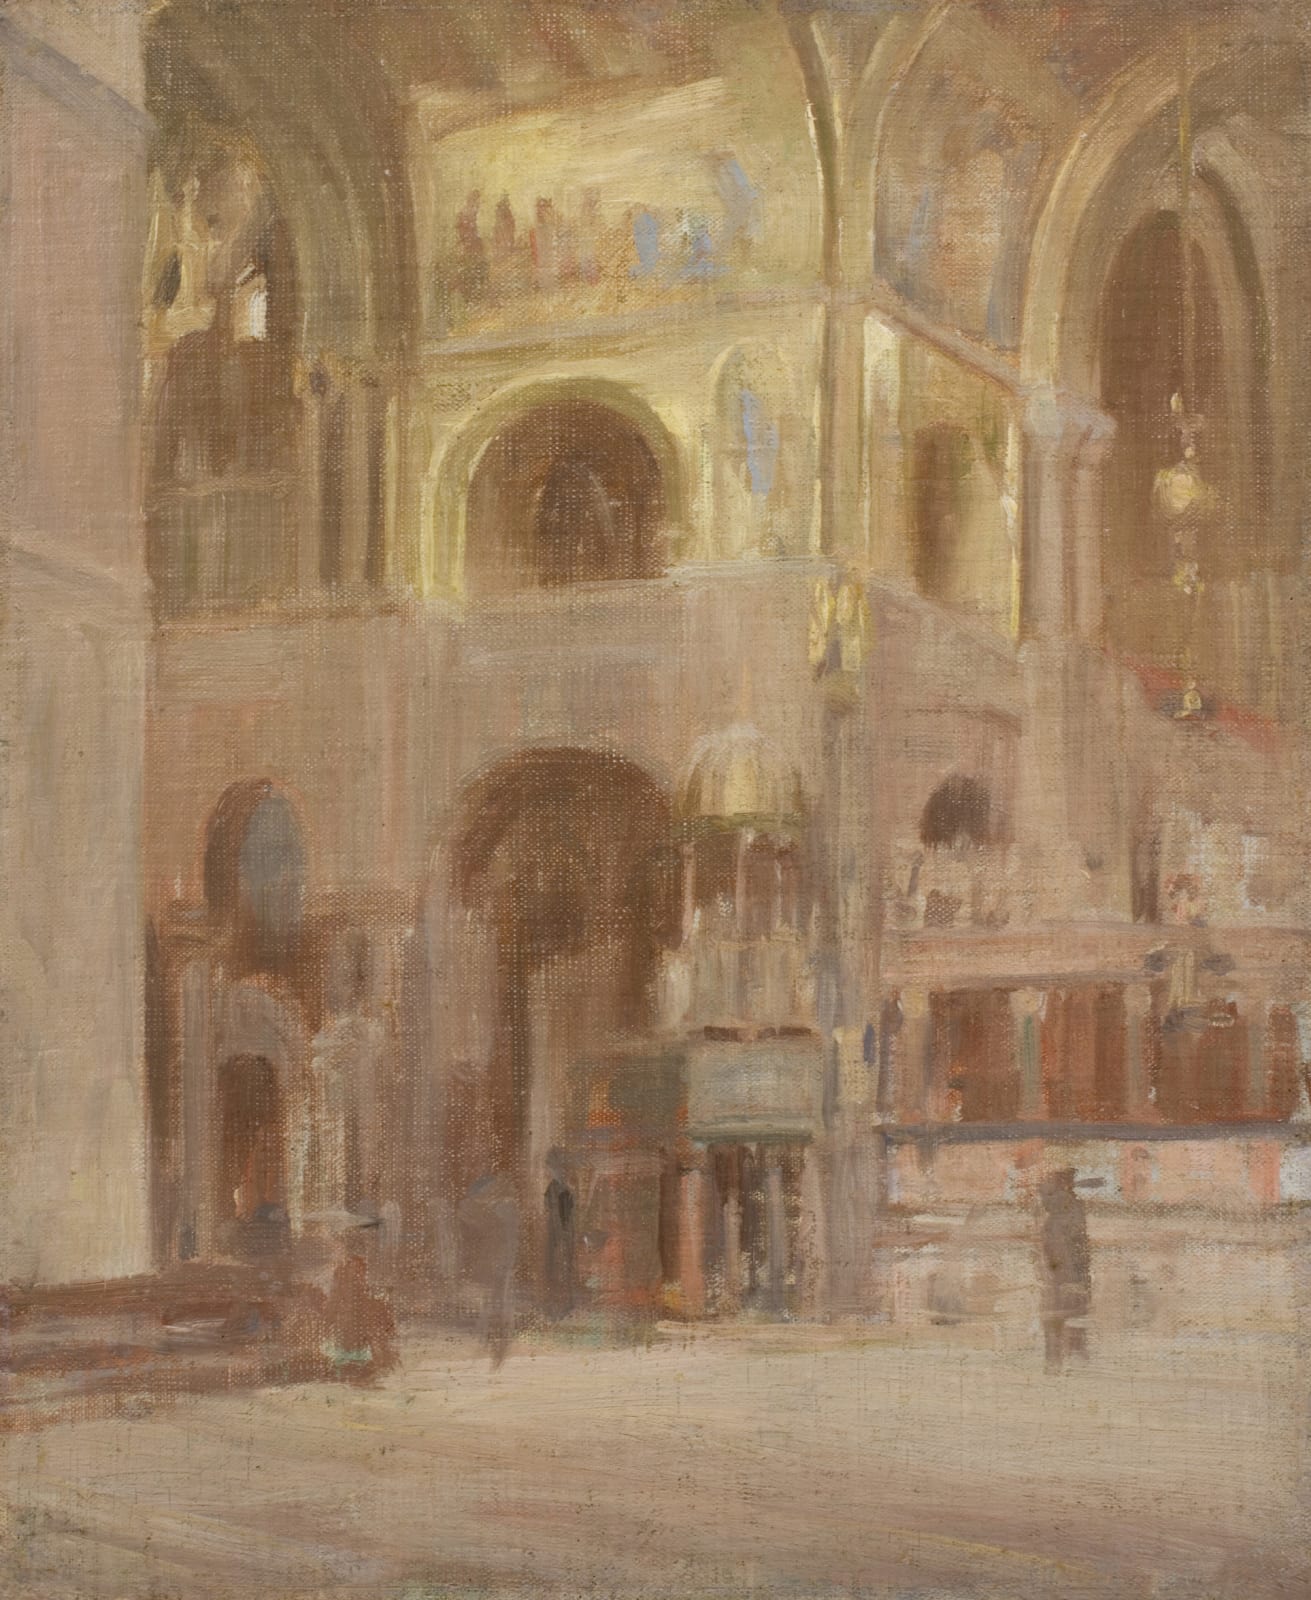 Walter Sickert, Study for Interior of St Mark's, Venice, 1895-96